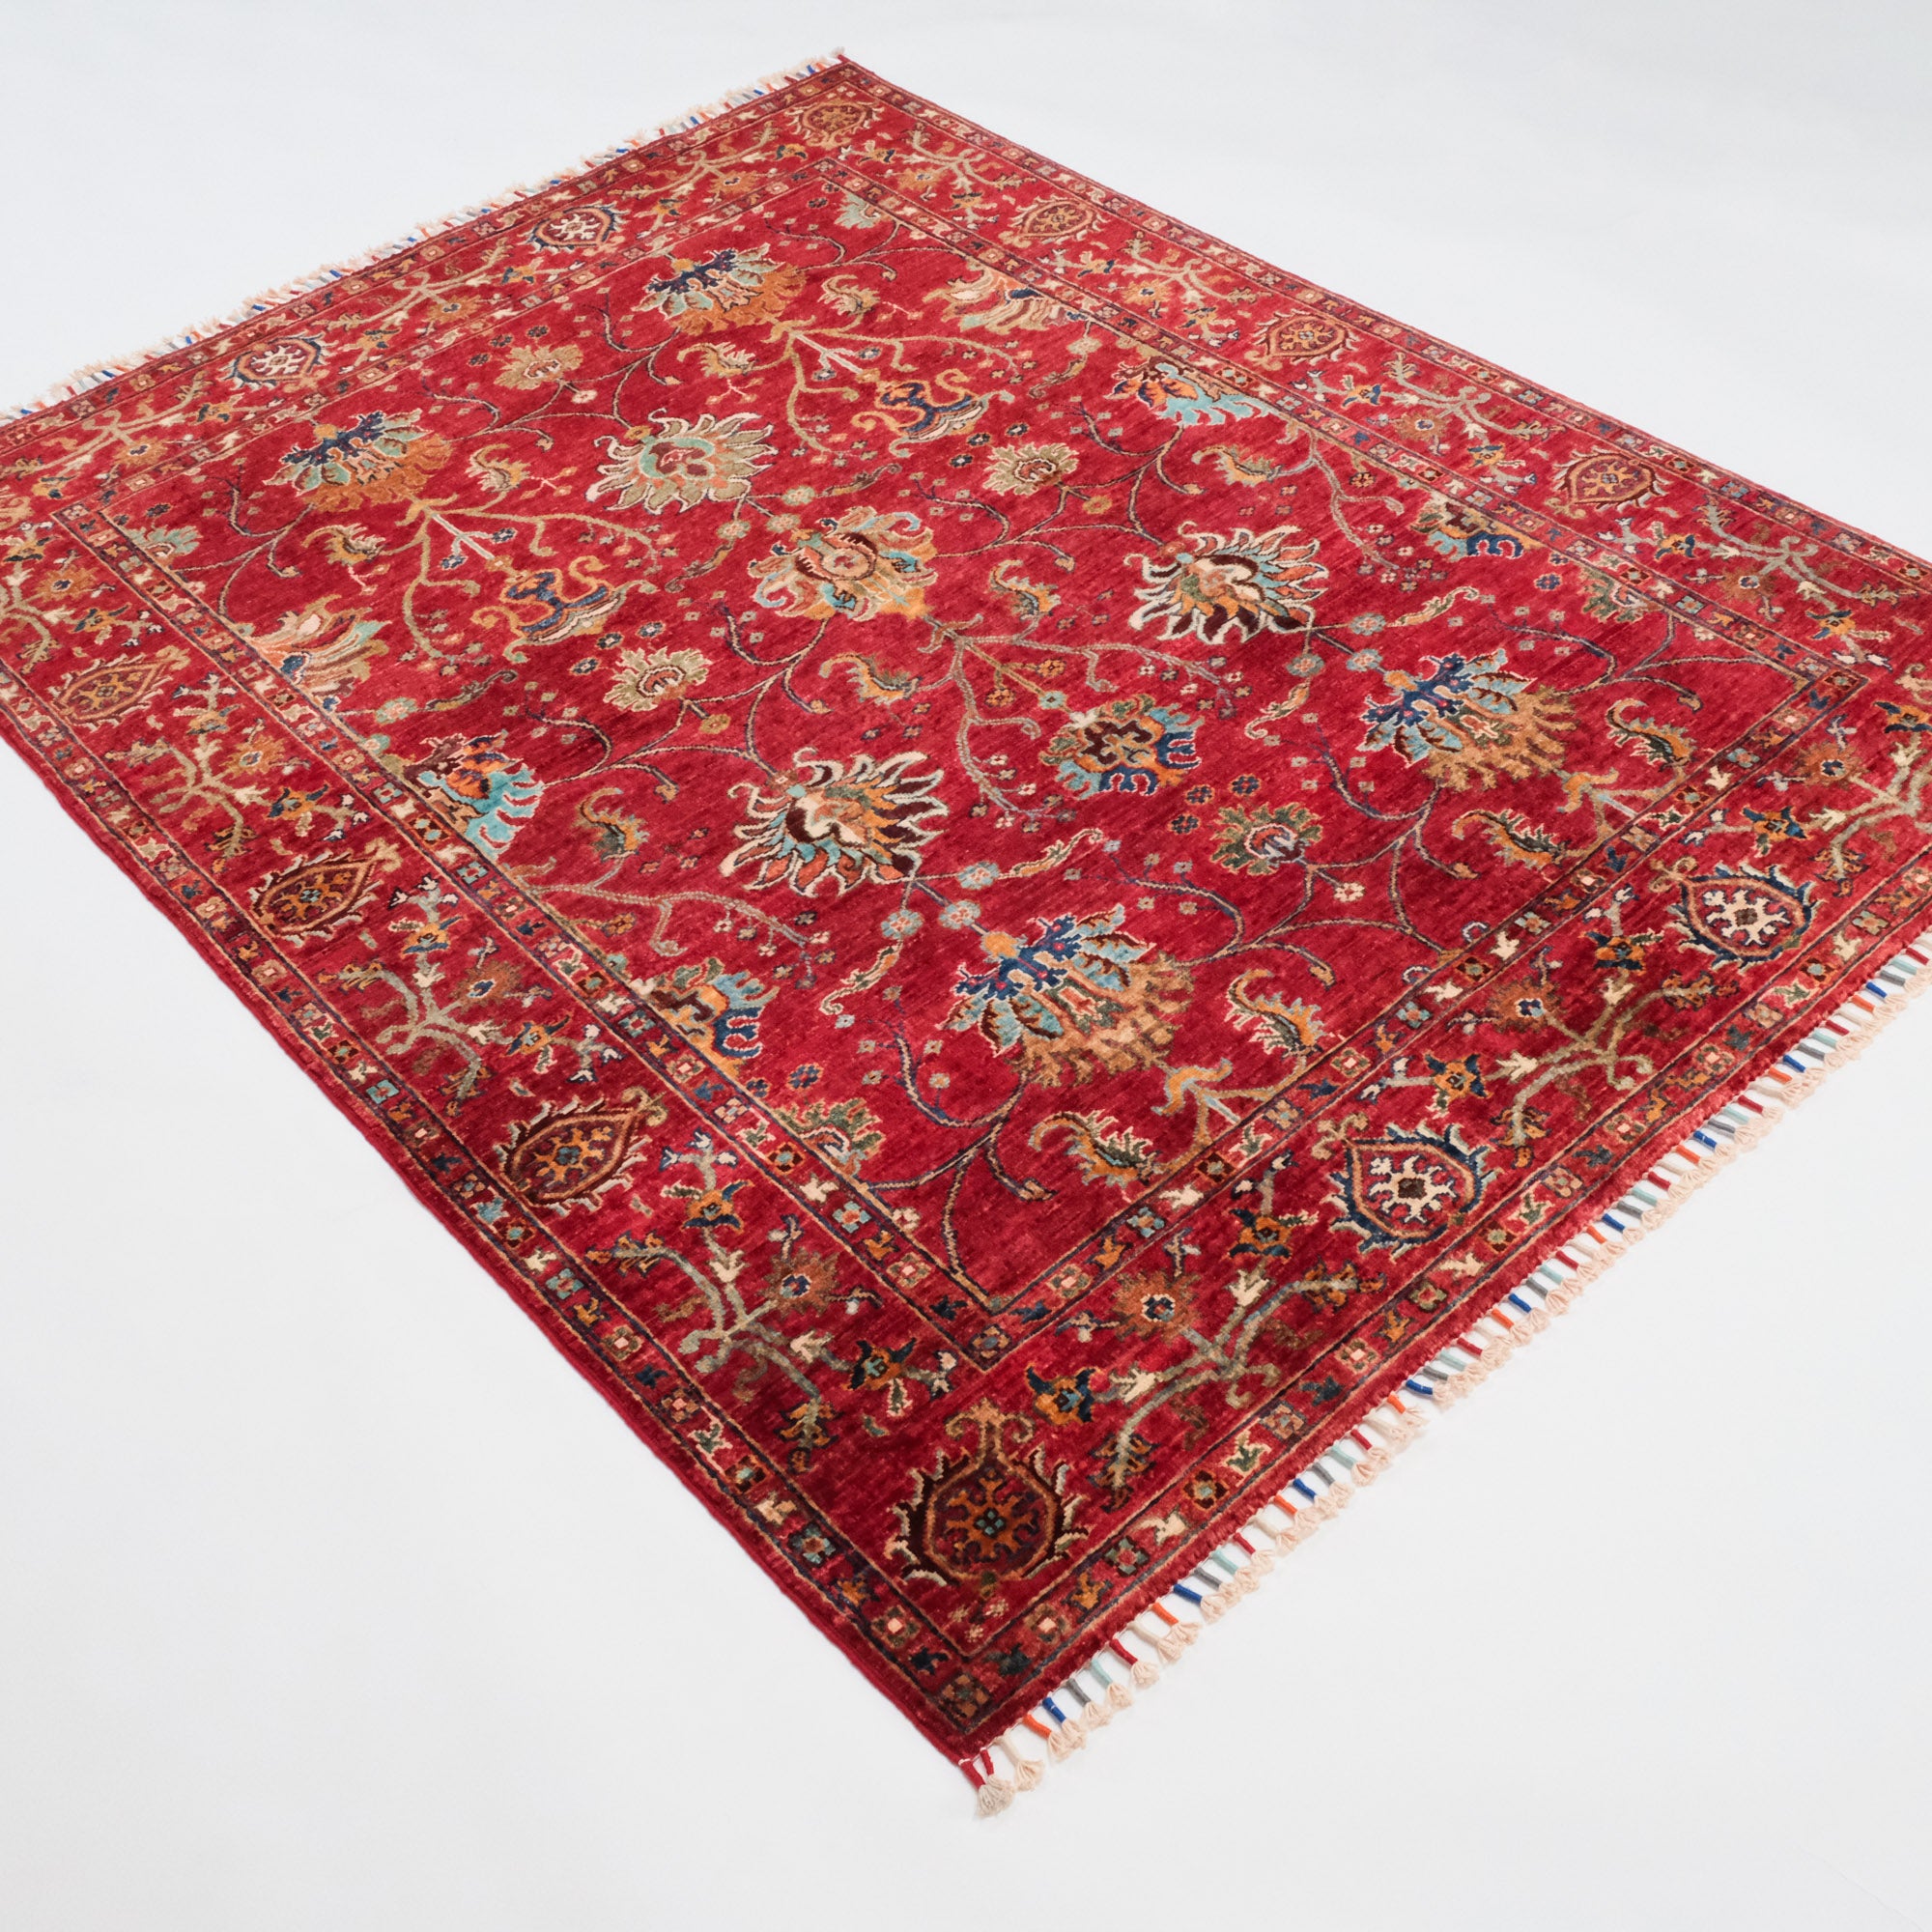 Şahzade Series Hand-Woven Uşak Patterned Red Carpet